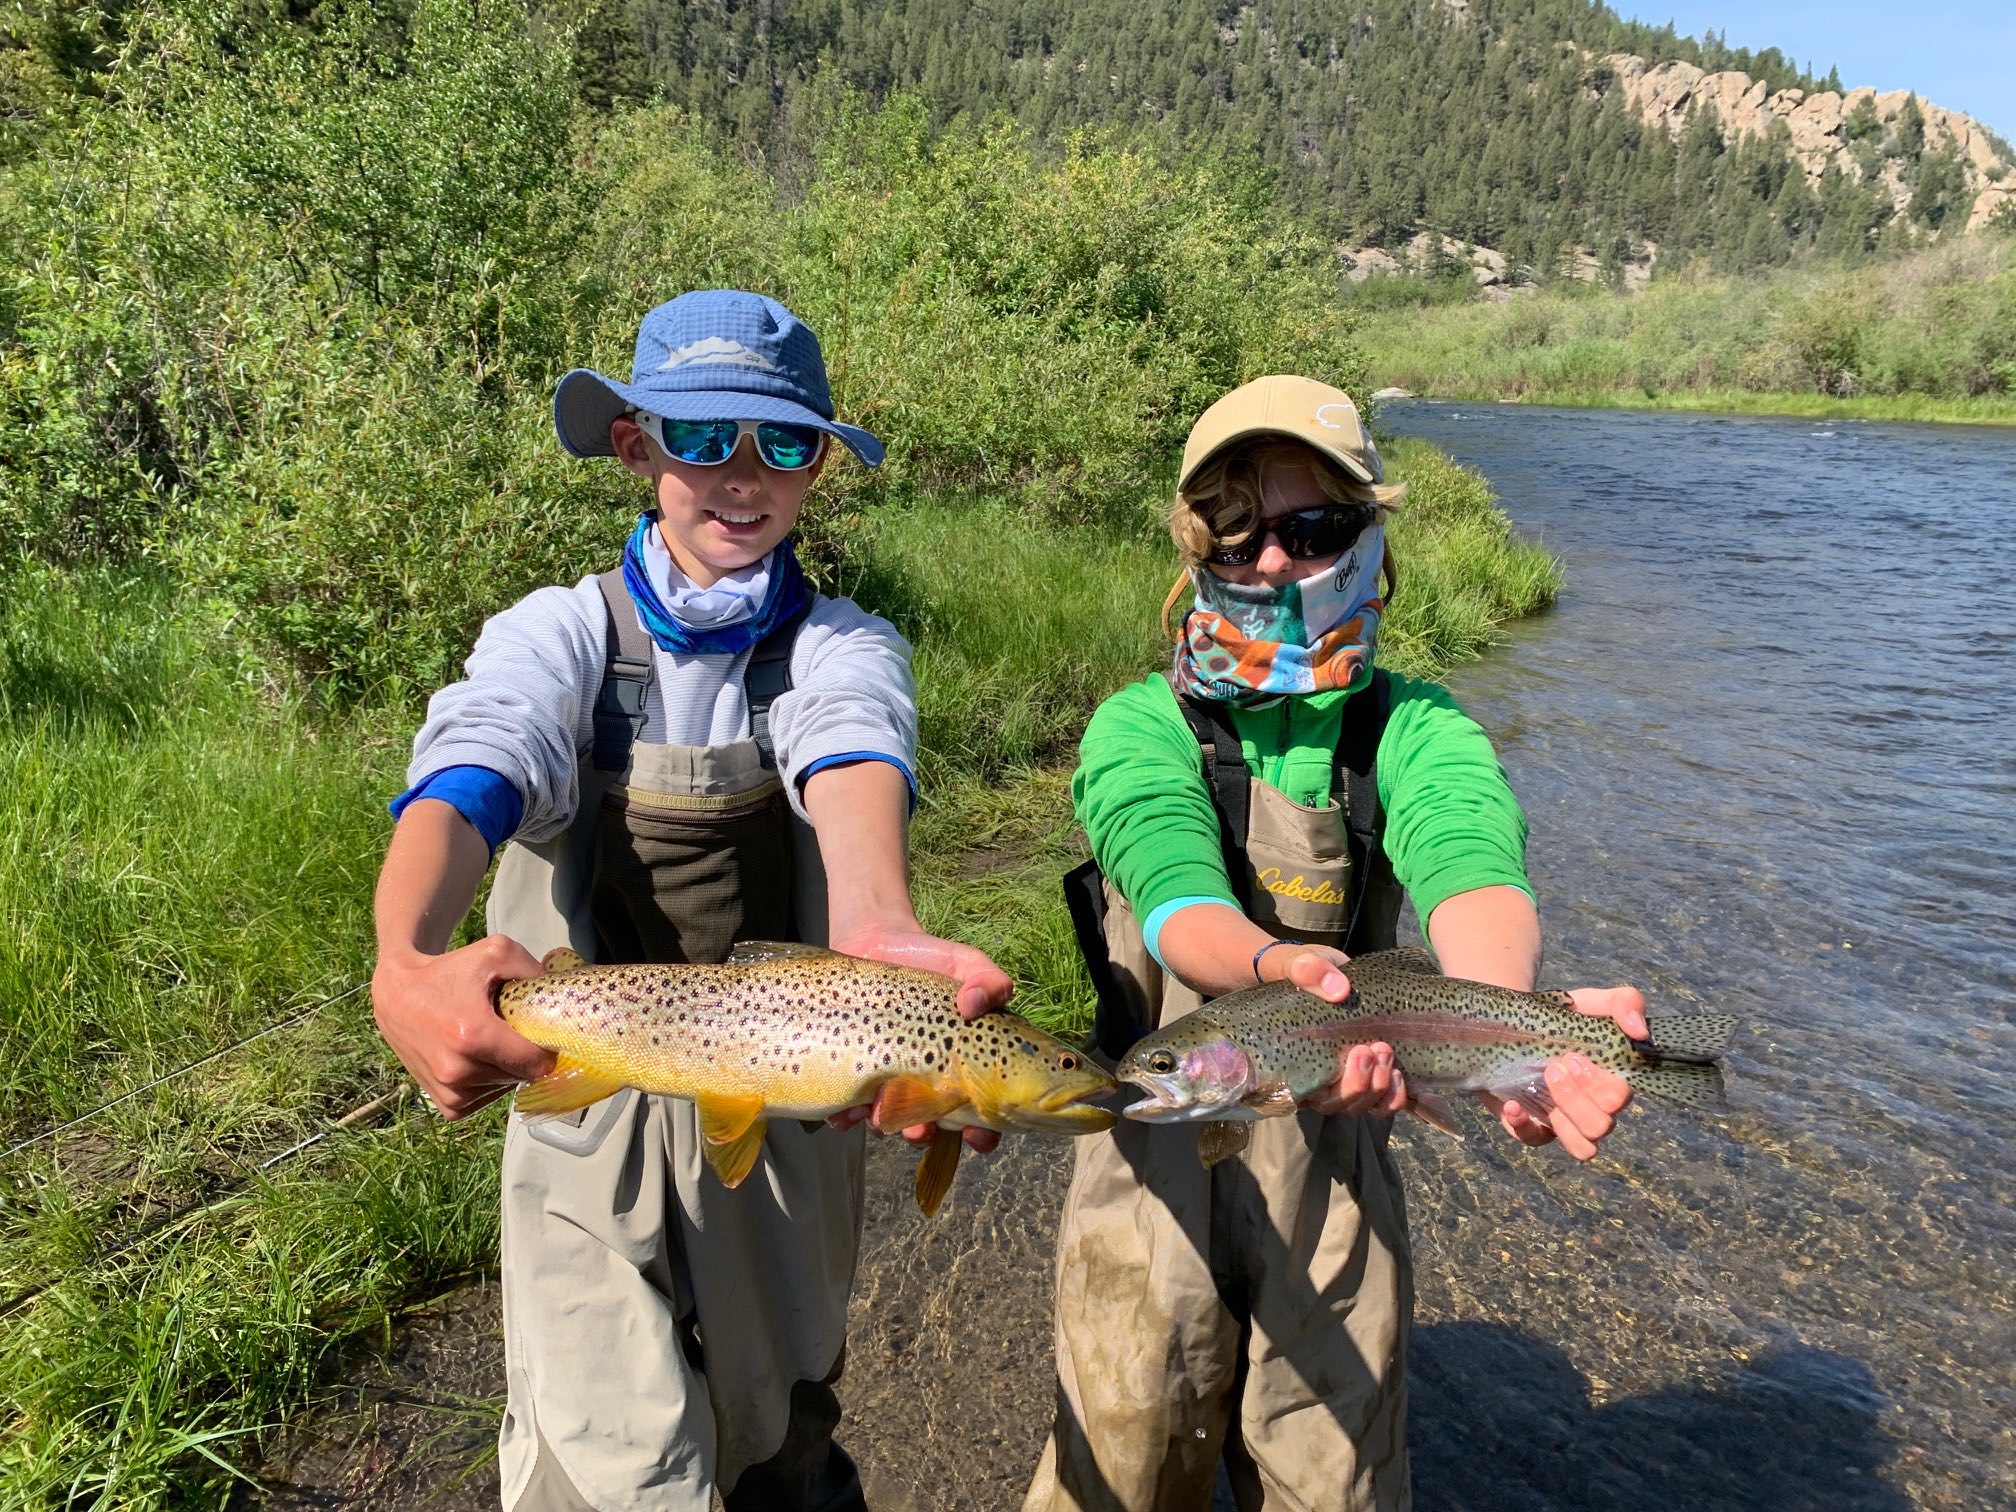 Colorado River Utah Fly Fishing, Camping, Boating - AllTrips